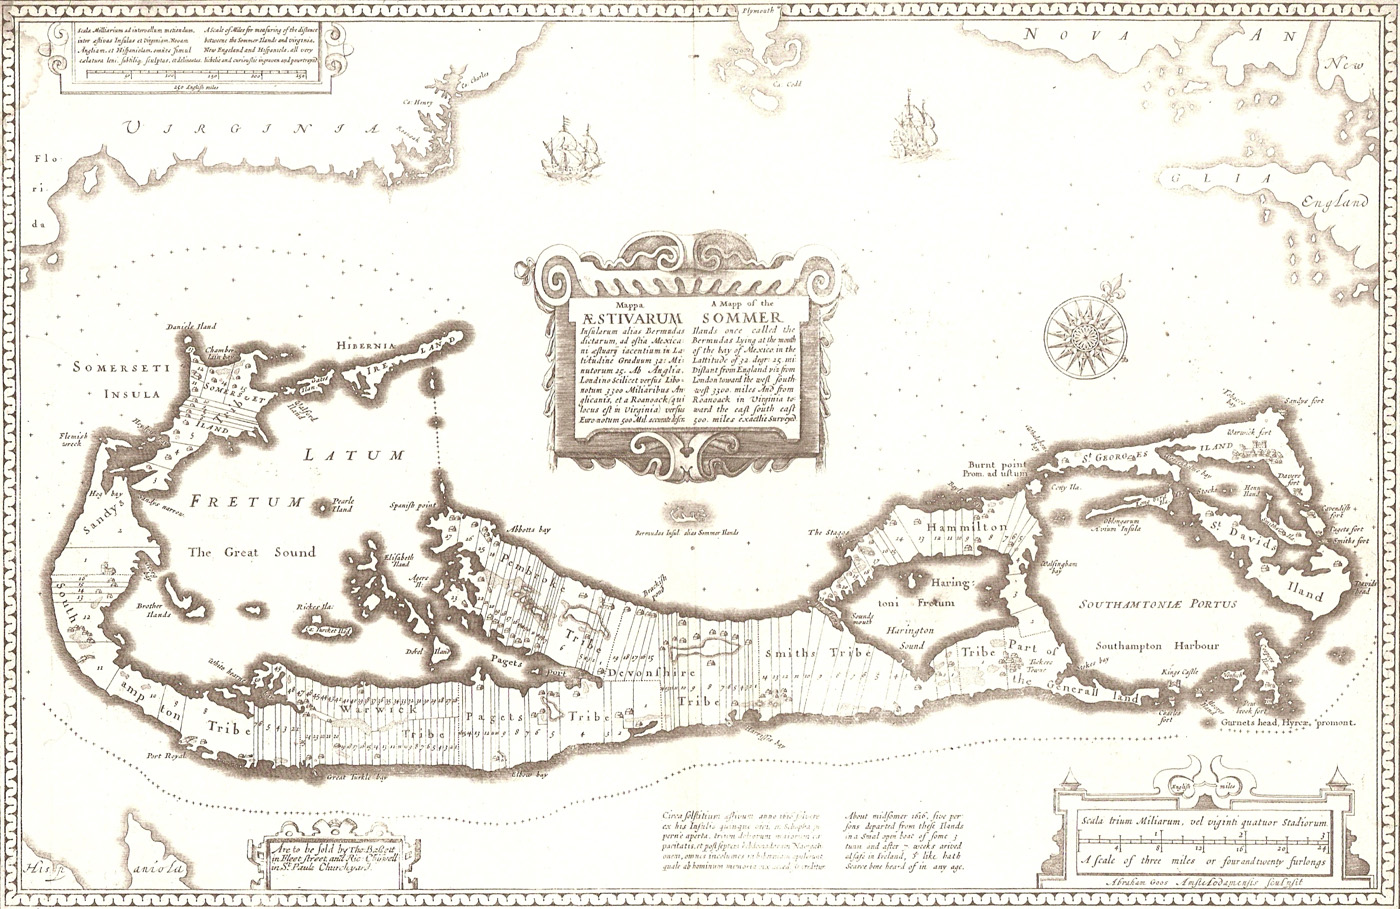 John Speed's 1676 map of Bermuda